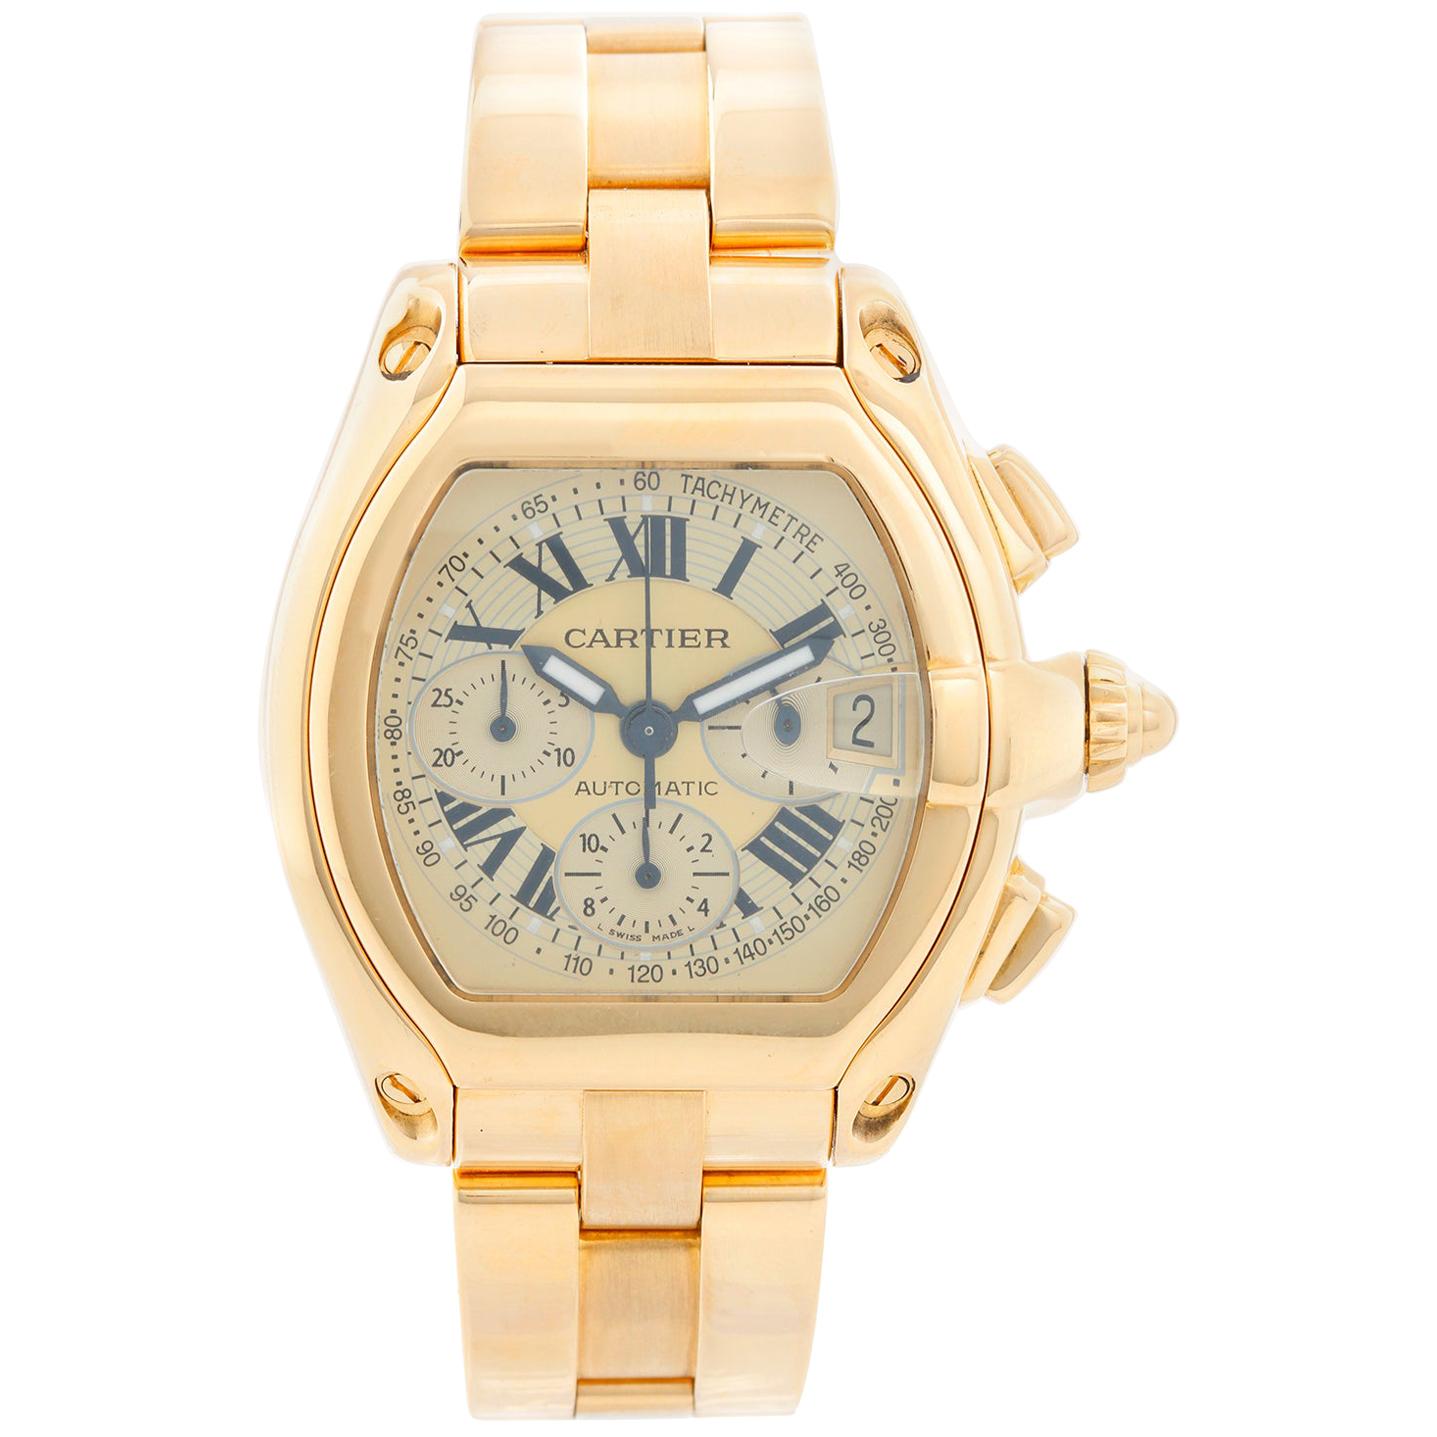 Cartier Roadster Chronograph 18 Karat Yellow Gold Men's Watch W62021Y2